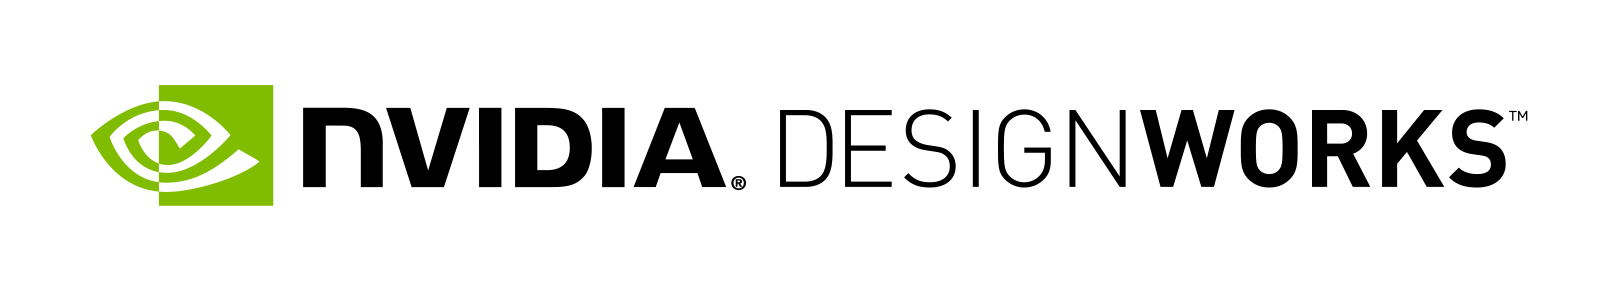 Nvidia Logo GEForce PNG Image